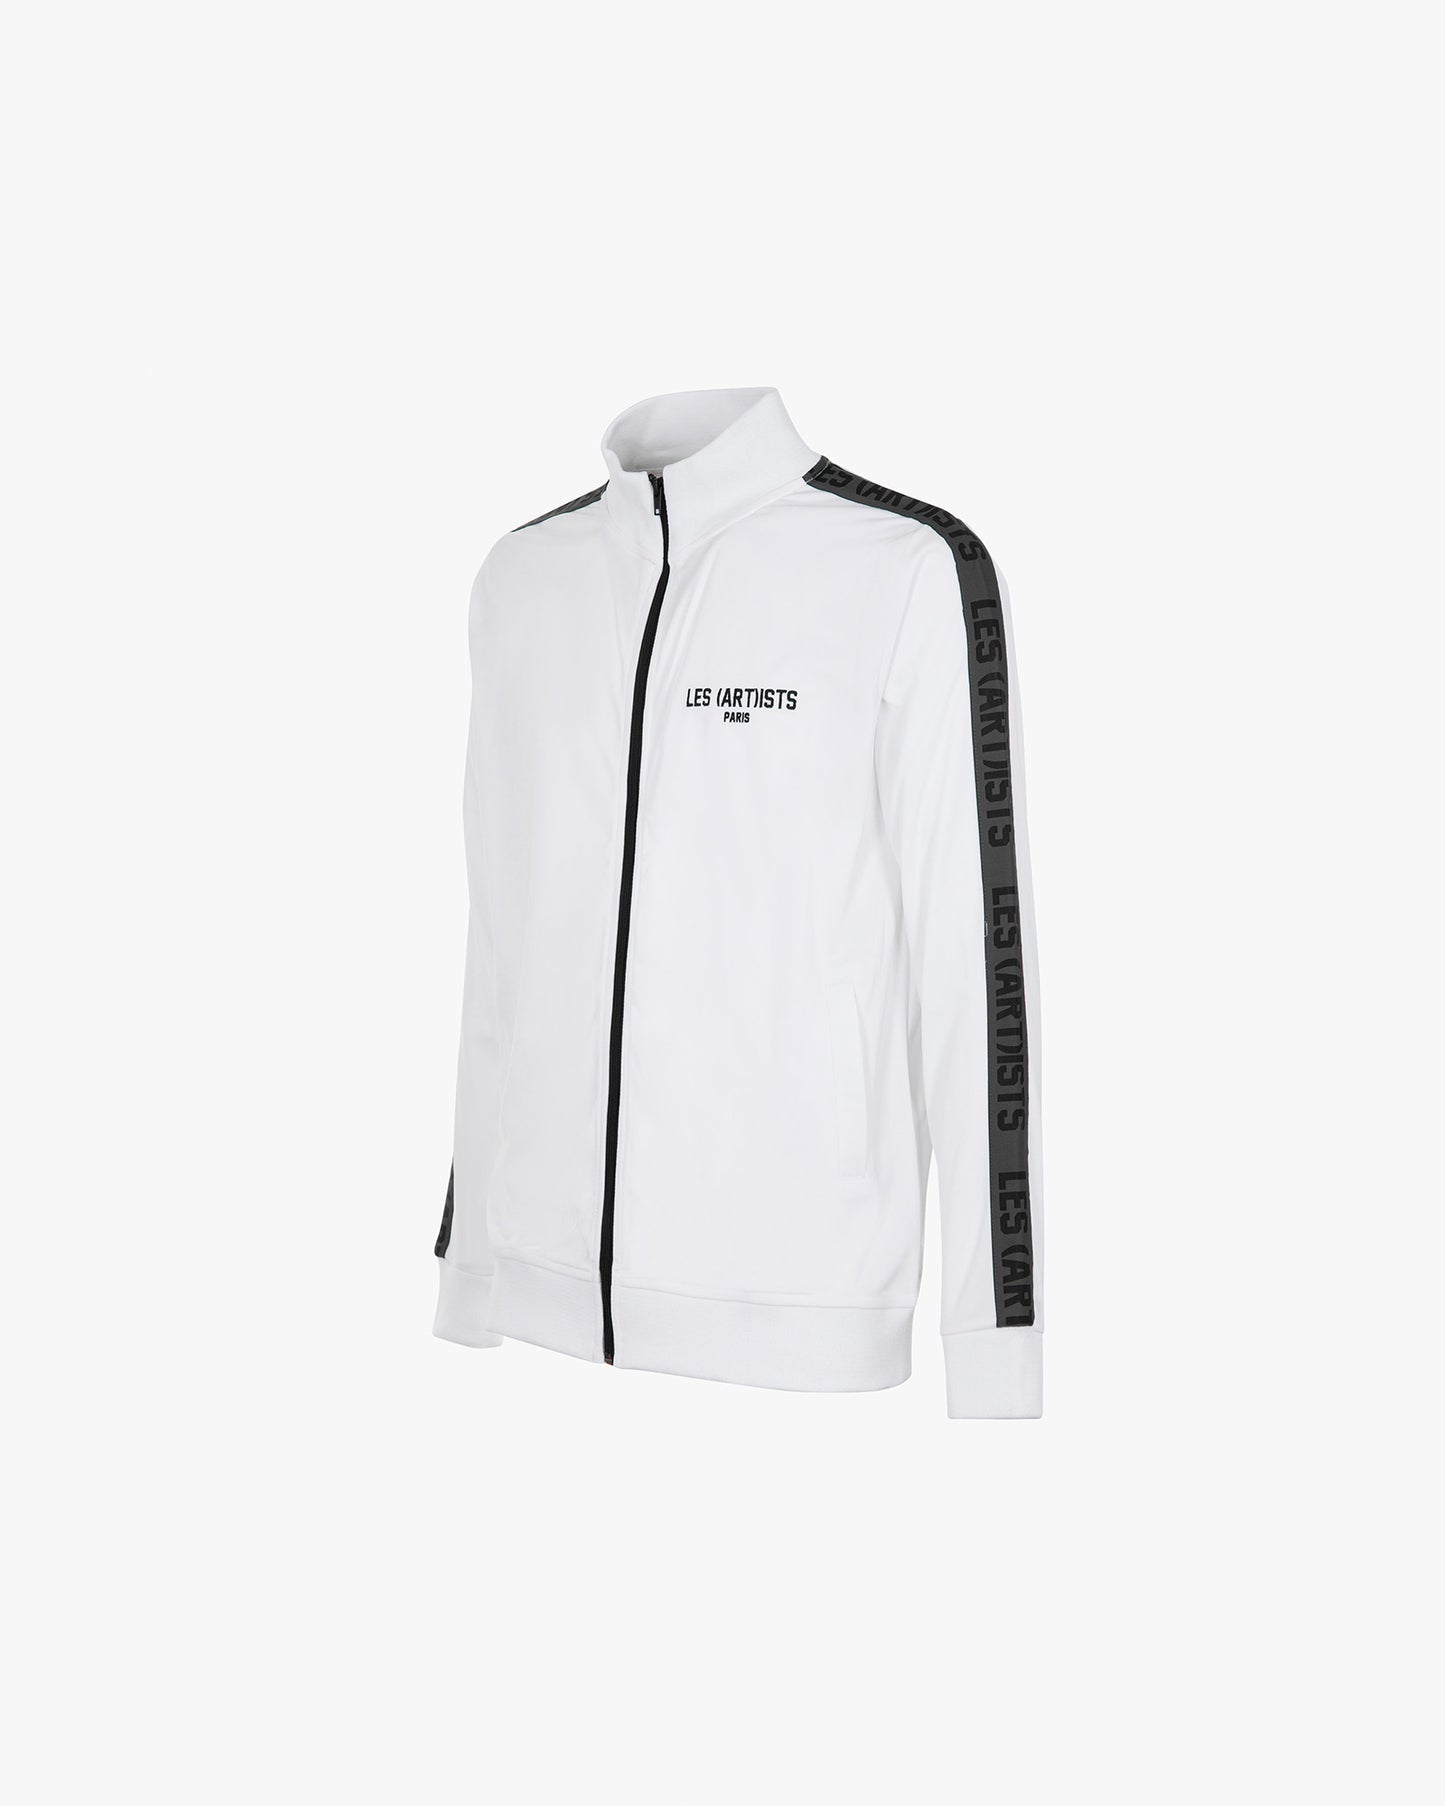 Sweat-shirt zip logo band White